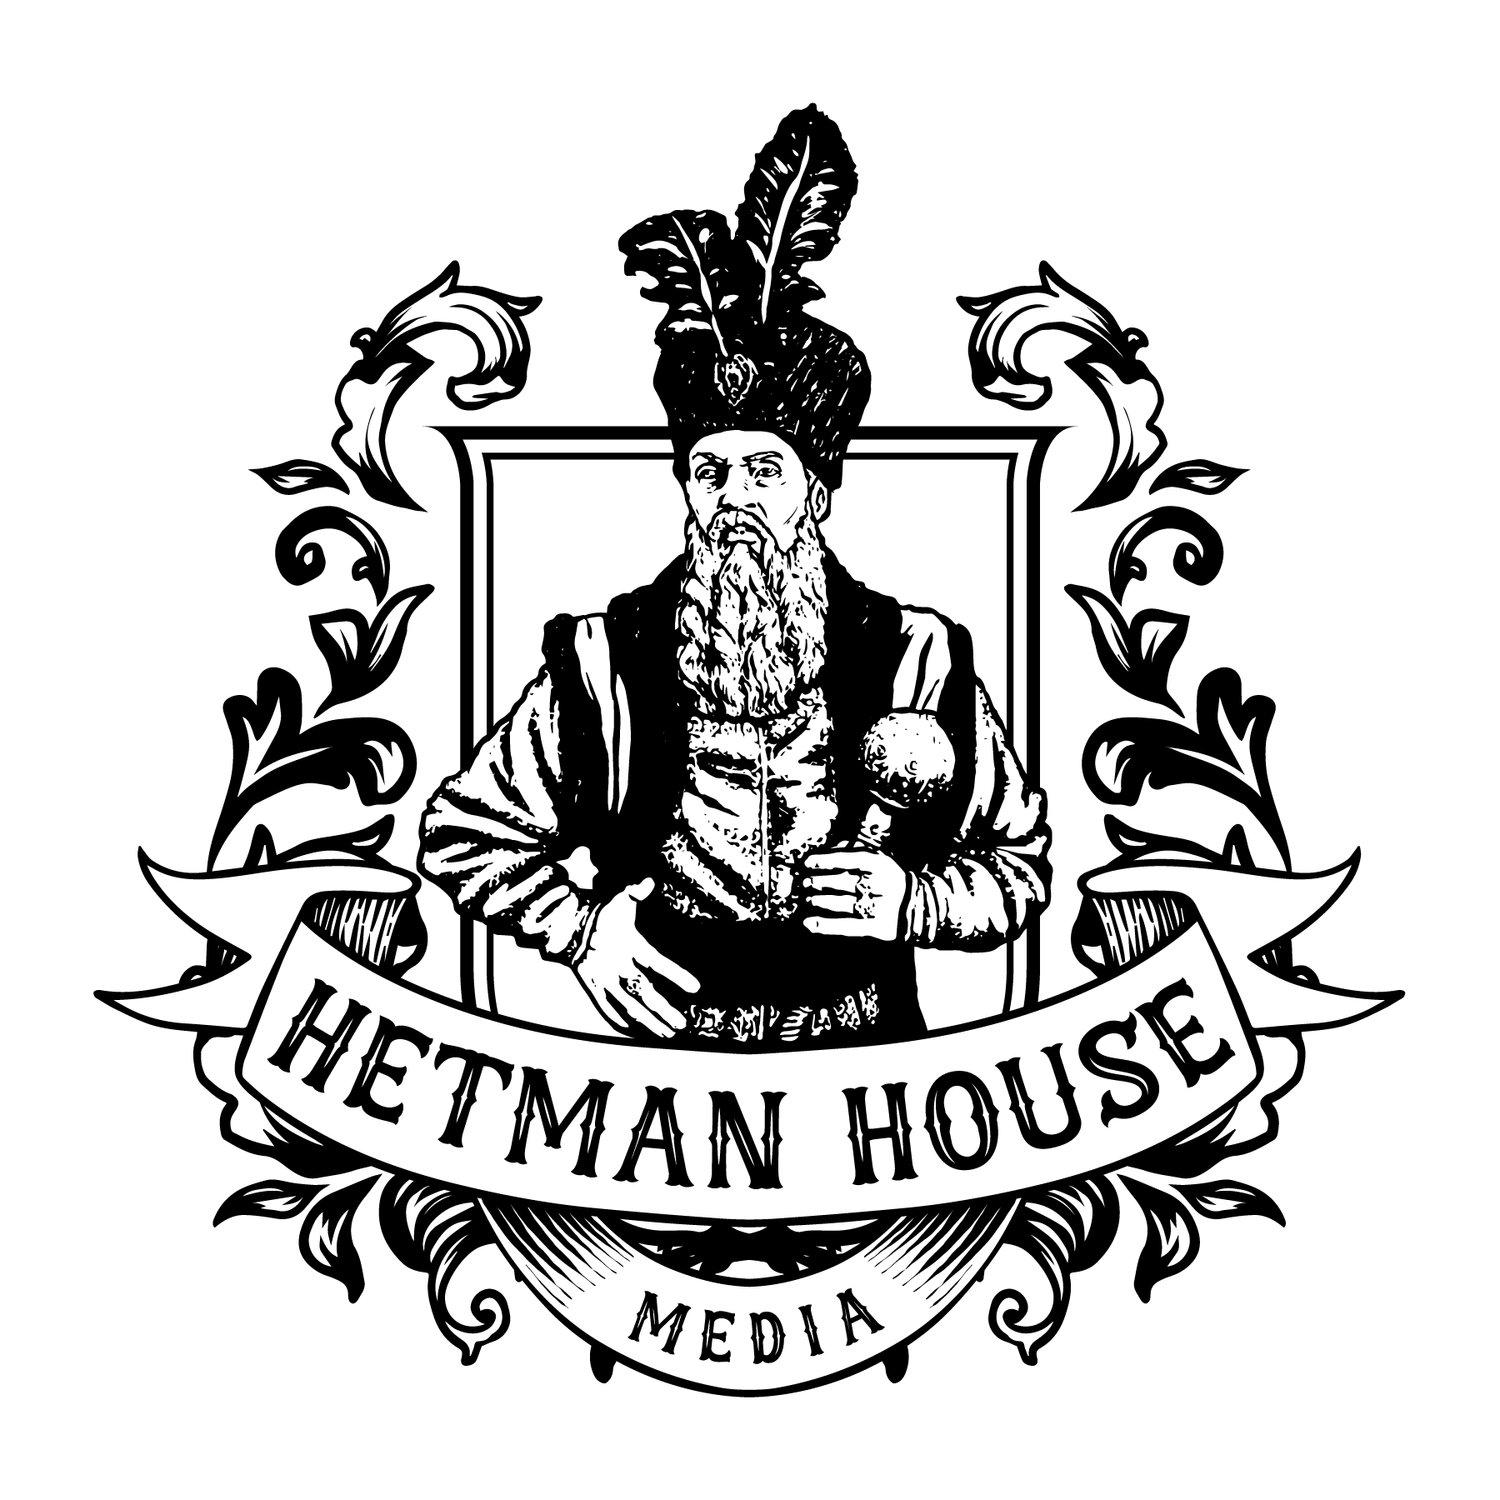 Hetman House Media